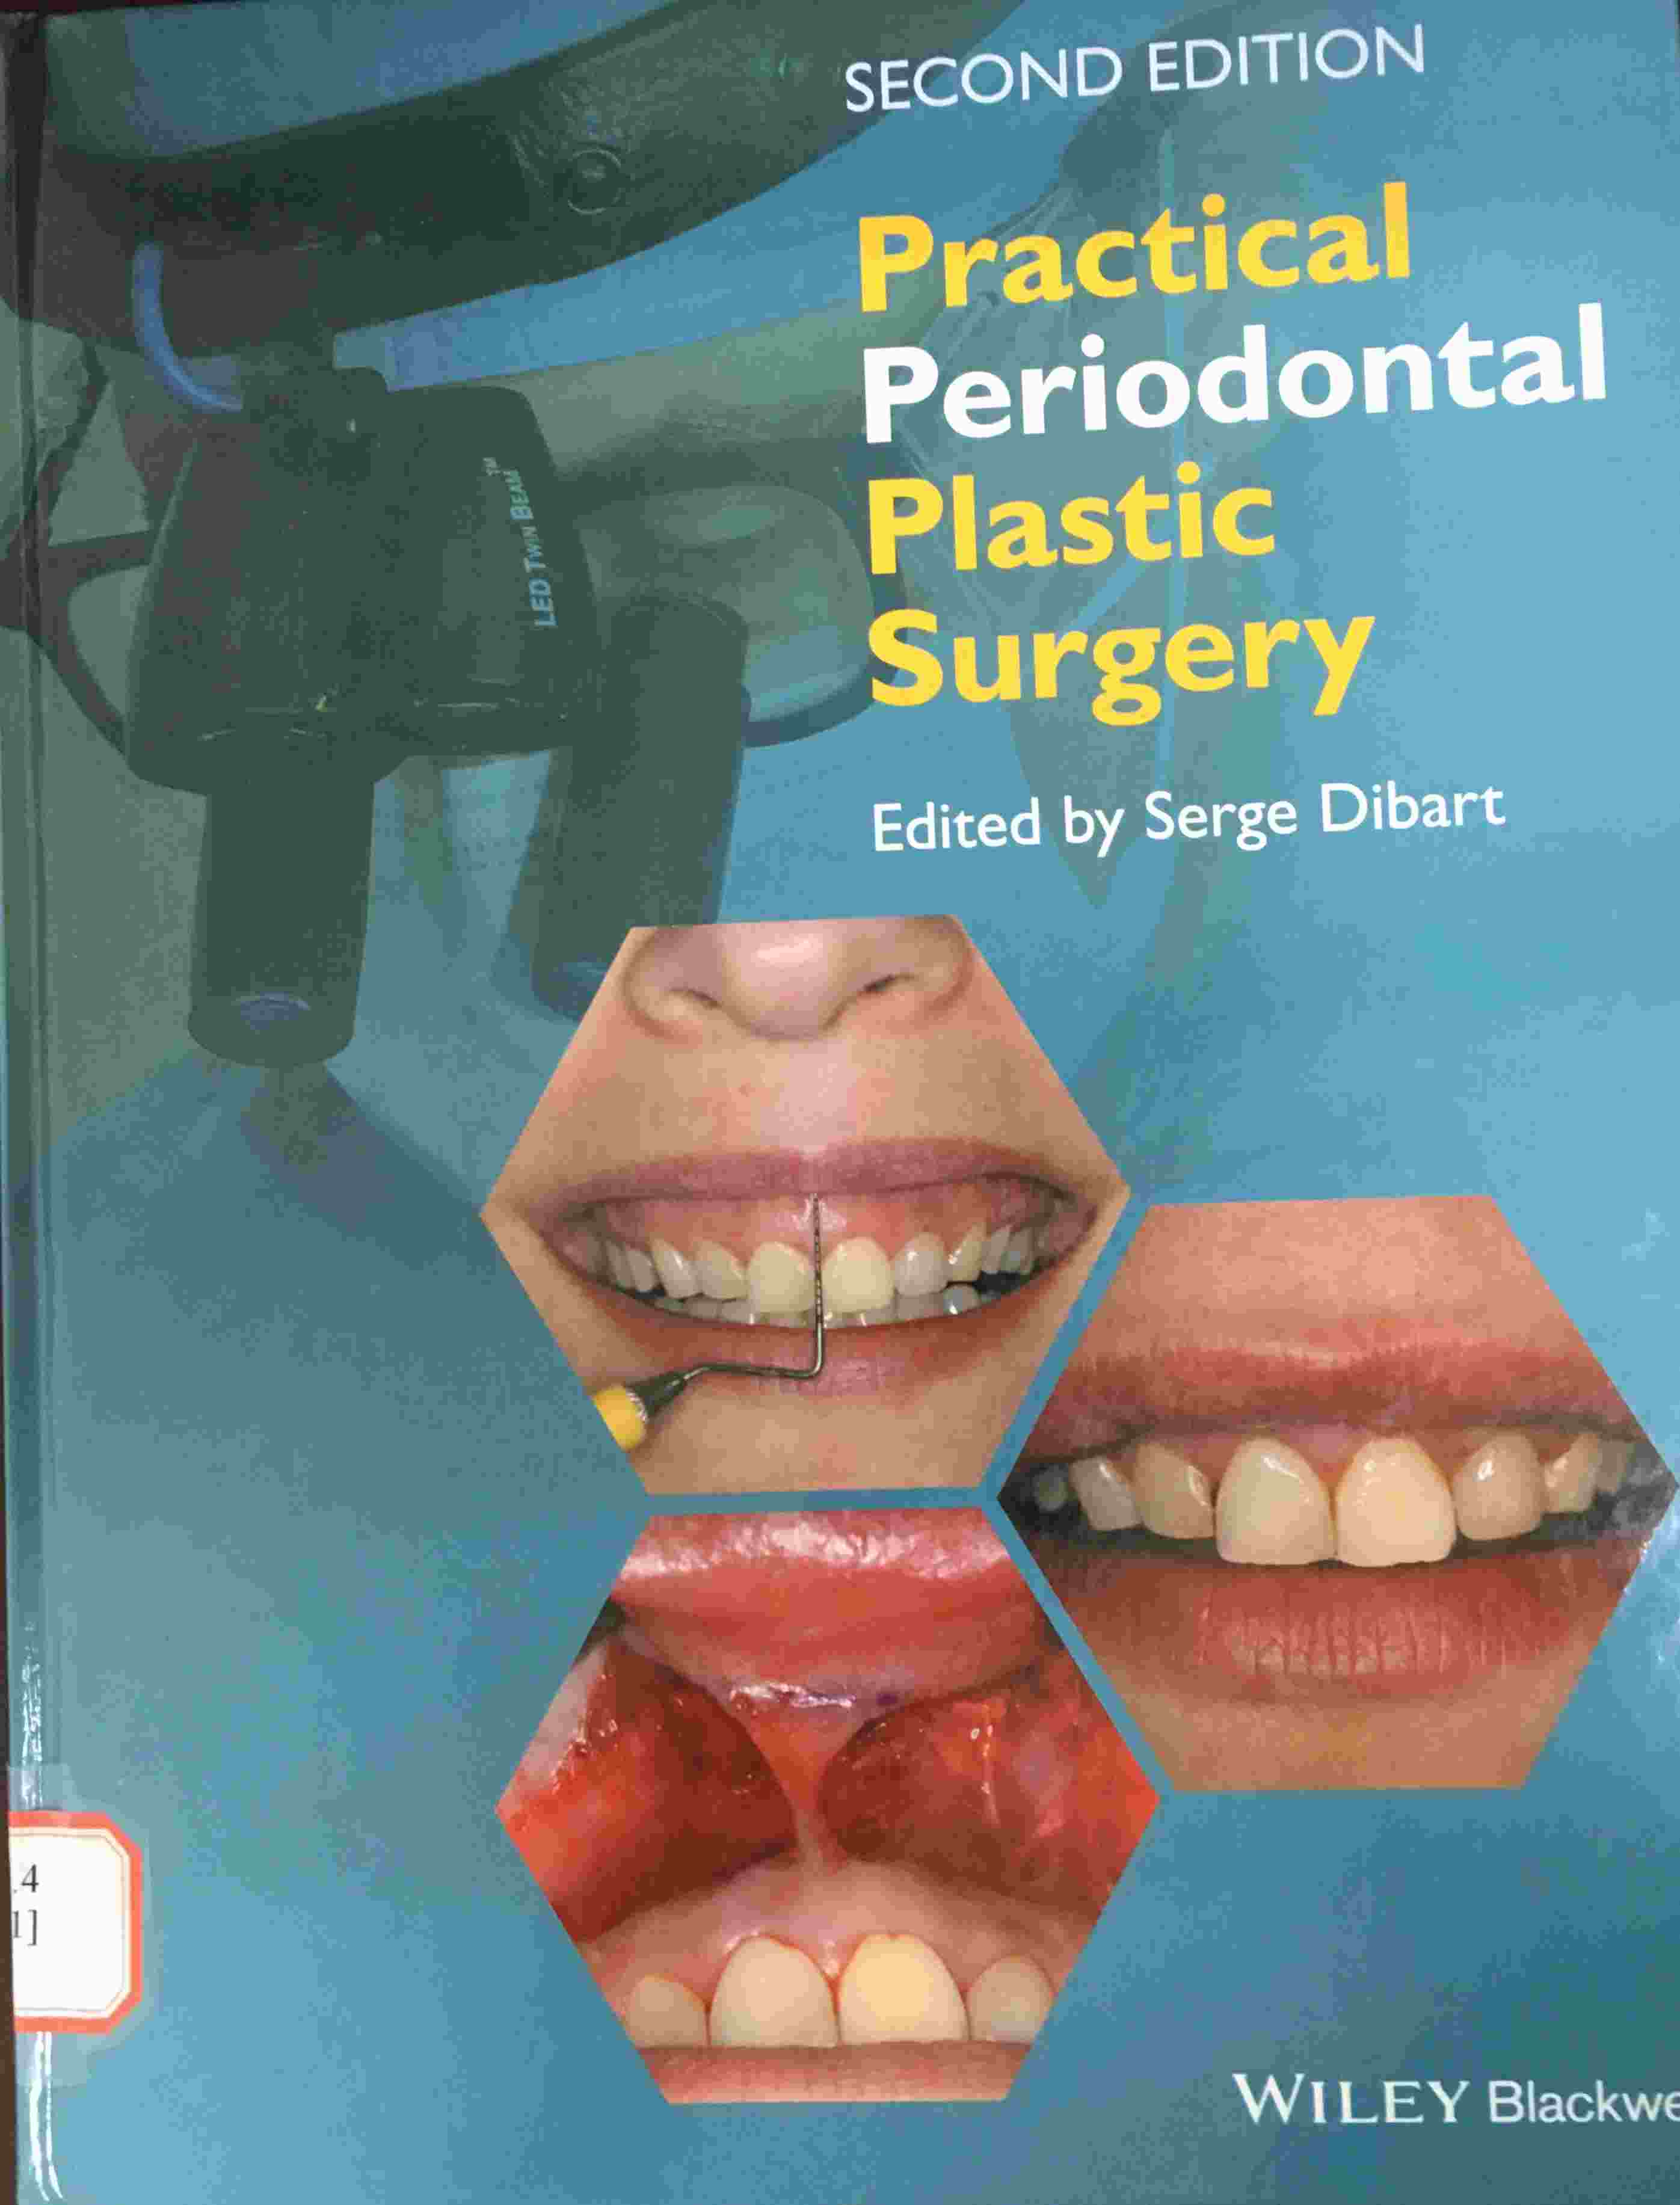 « Practical Periodontal Plastic Surgery »